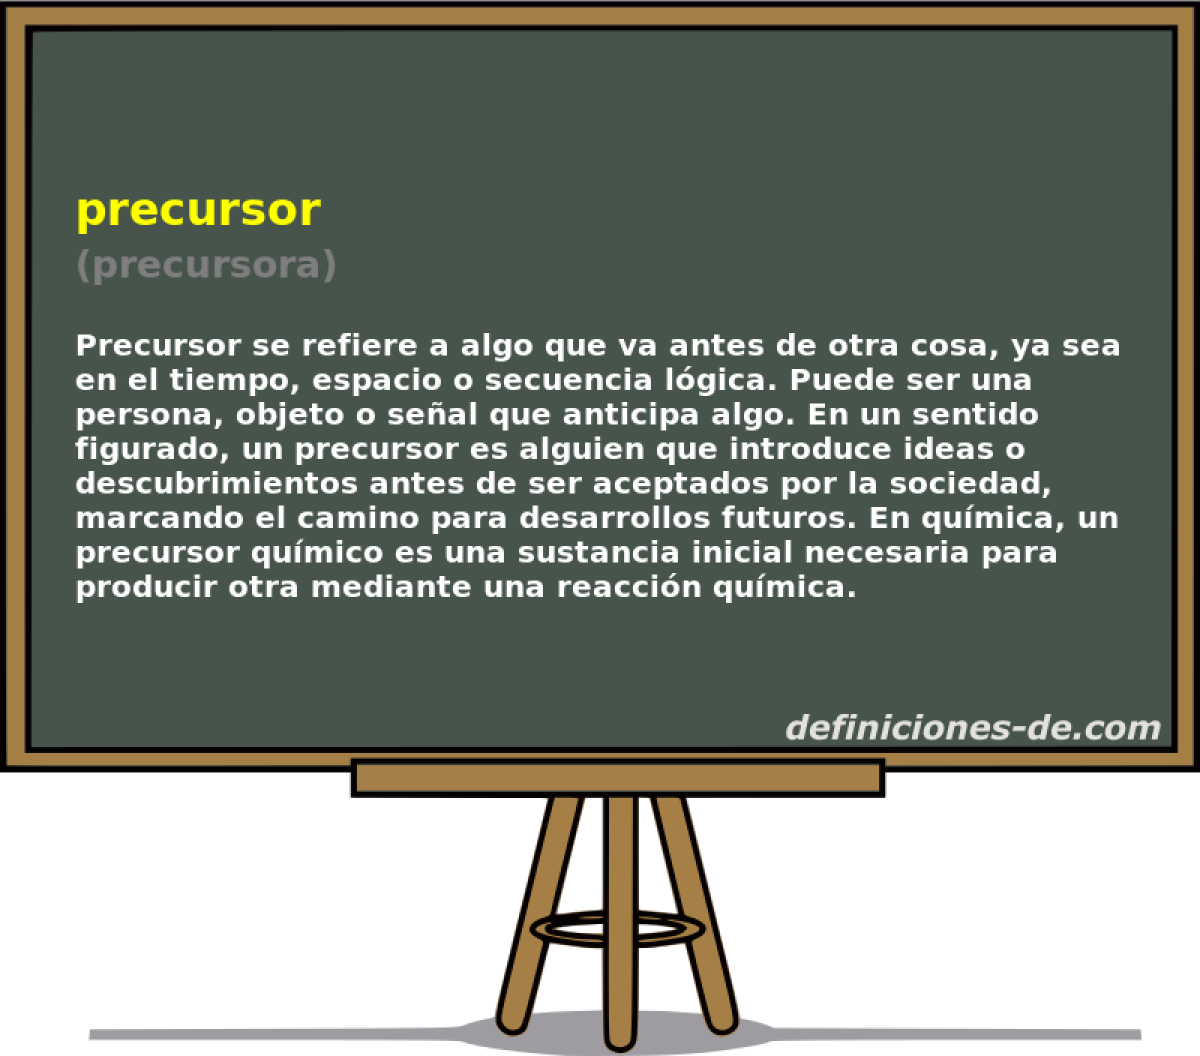 precursor (precursora)